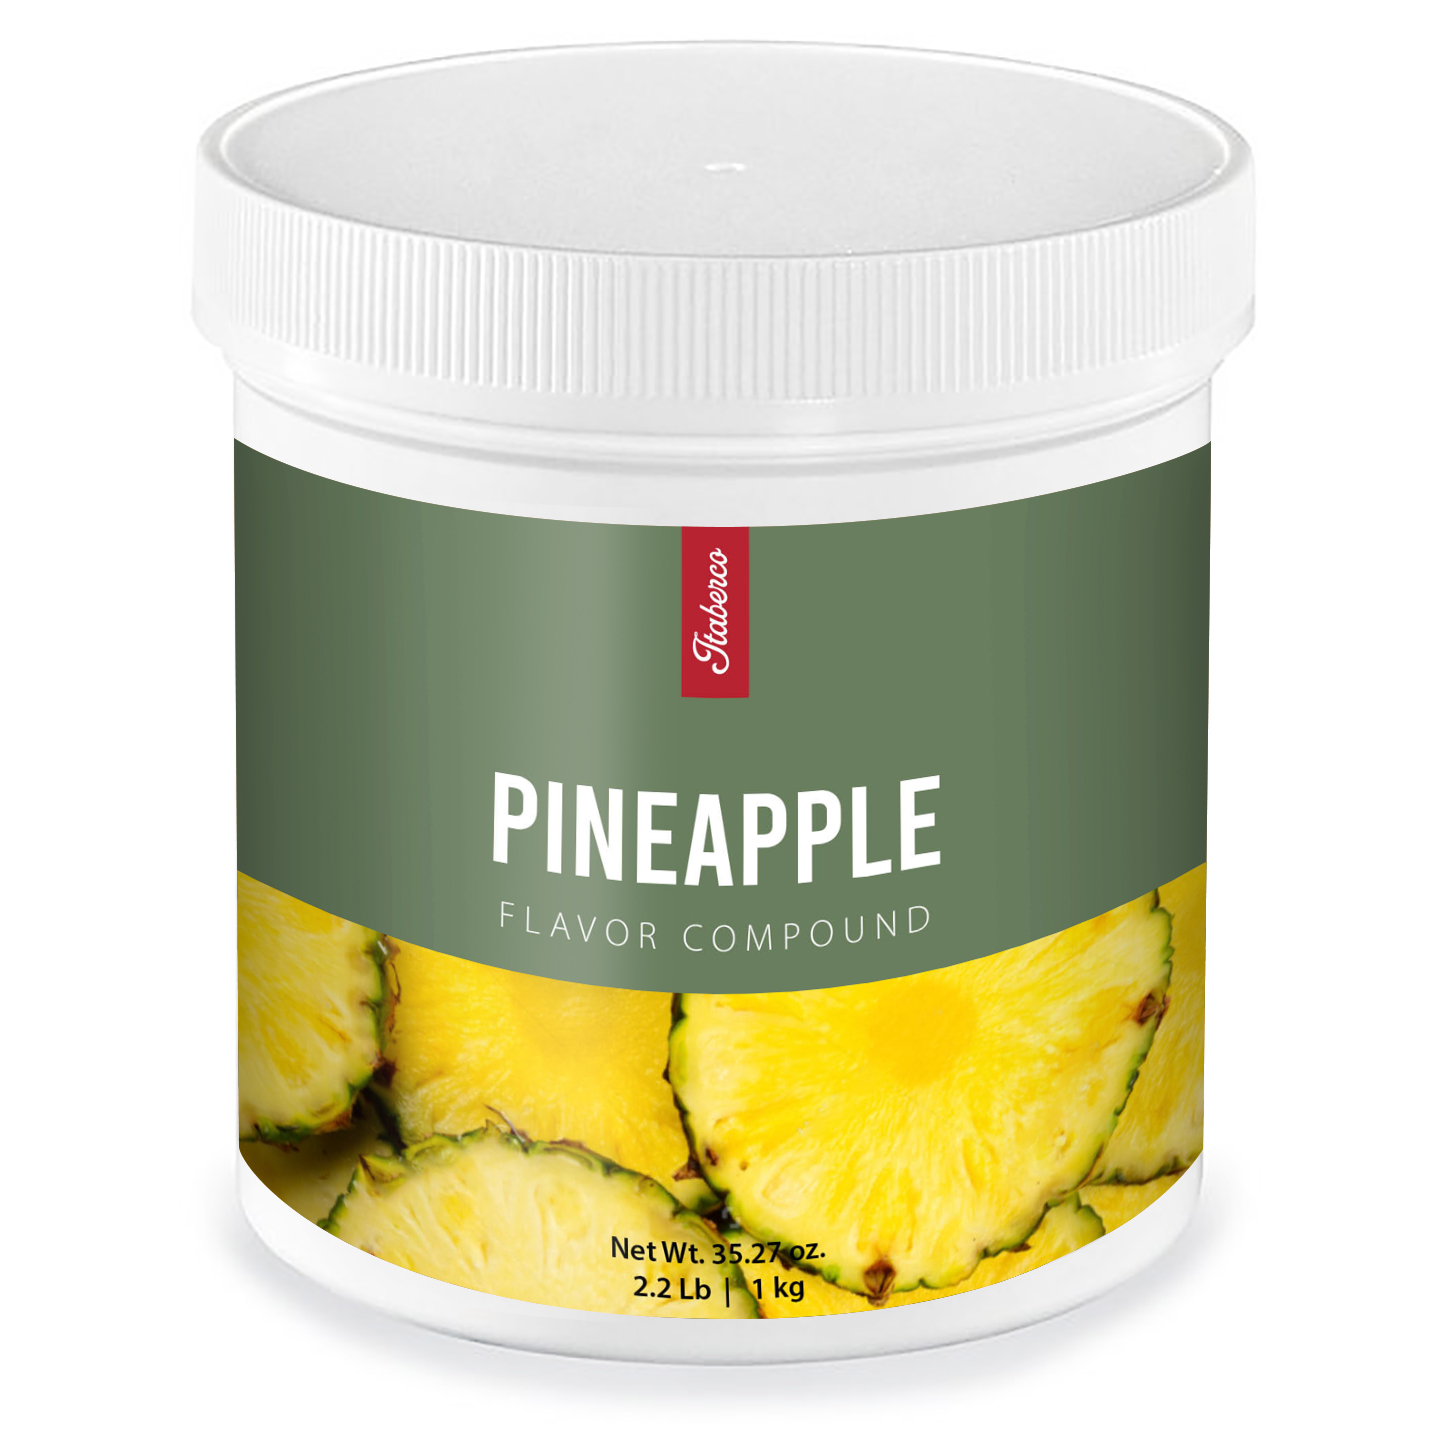 Pineapple Flavor Compound